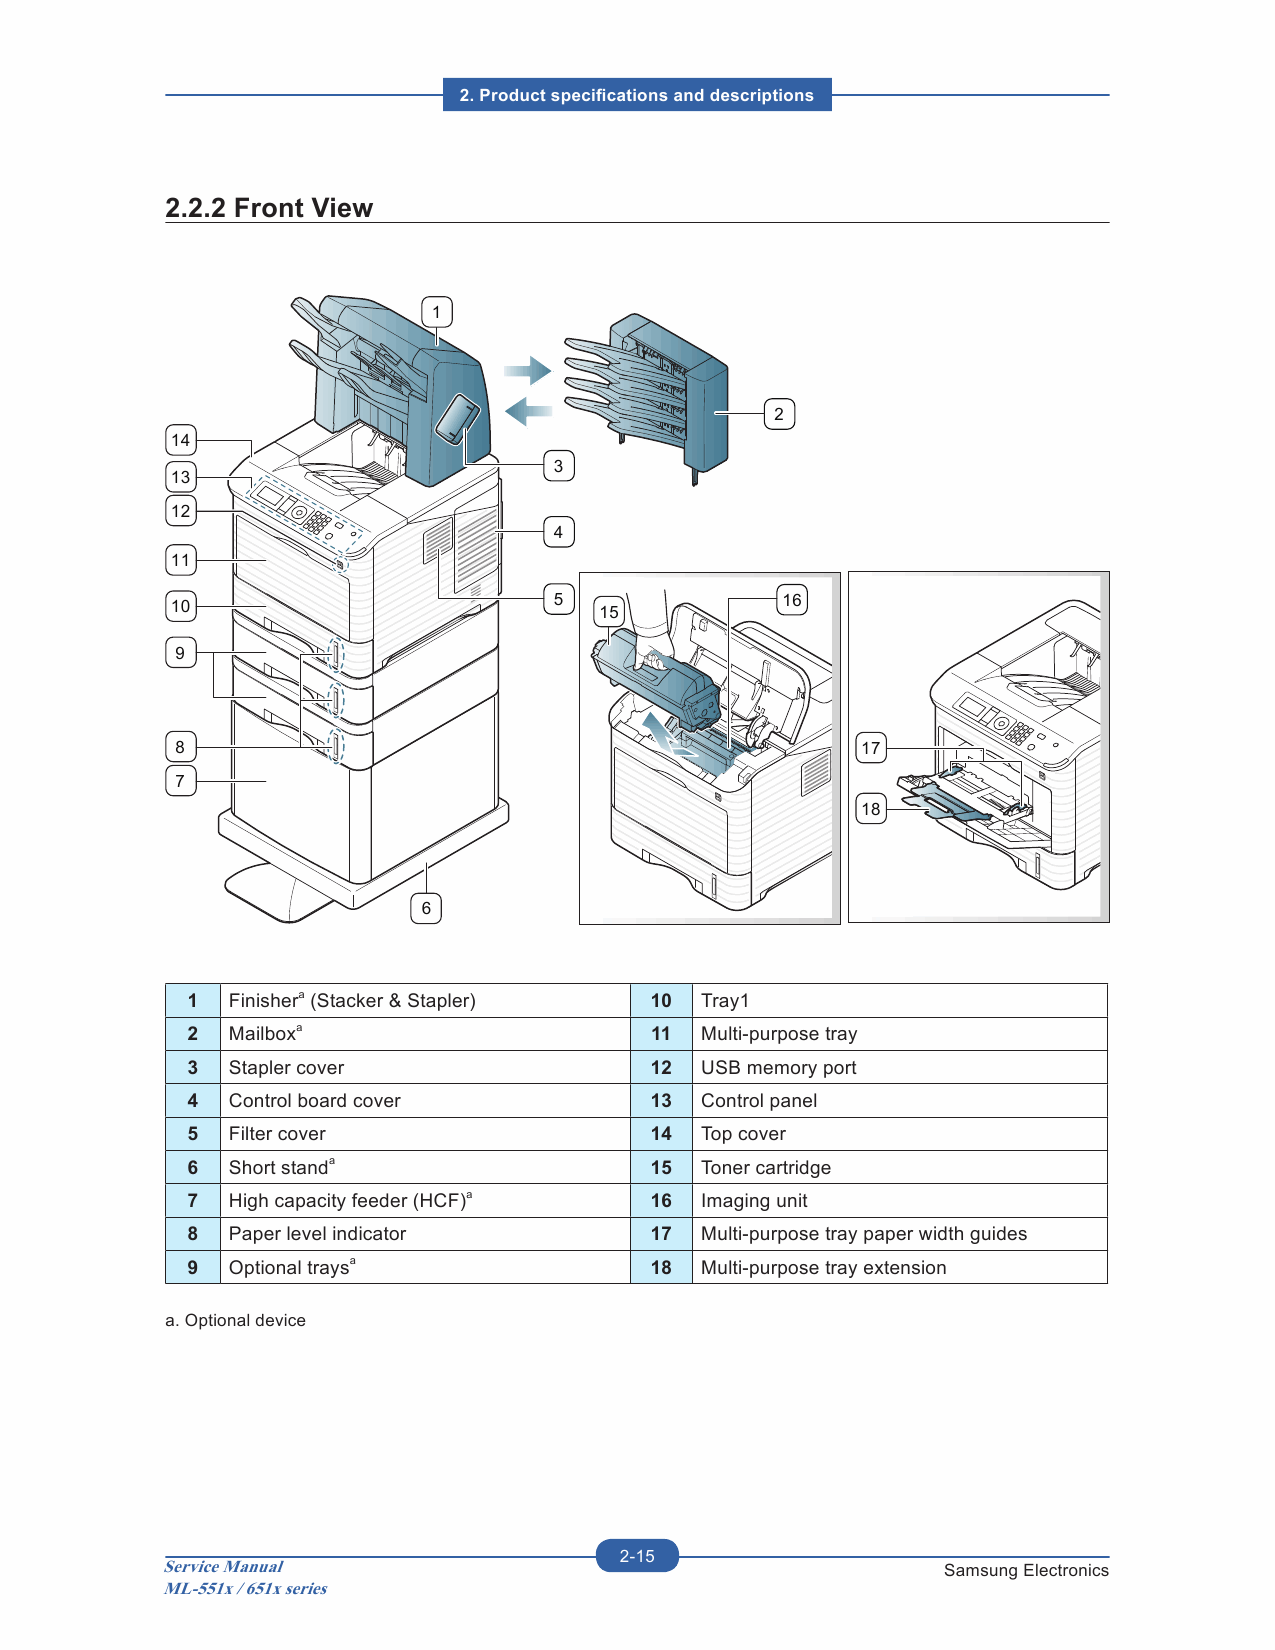 Samsung Mono-Laser-Printer ML-551x 651x Service Manual-2